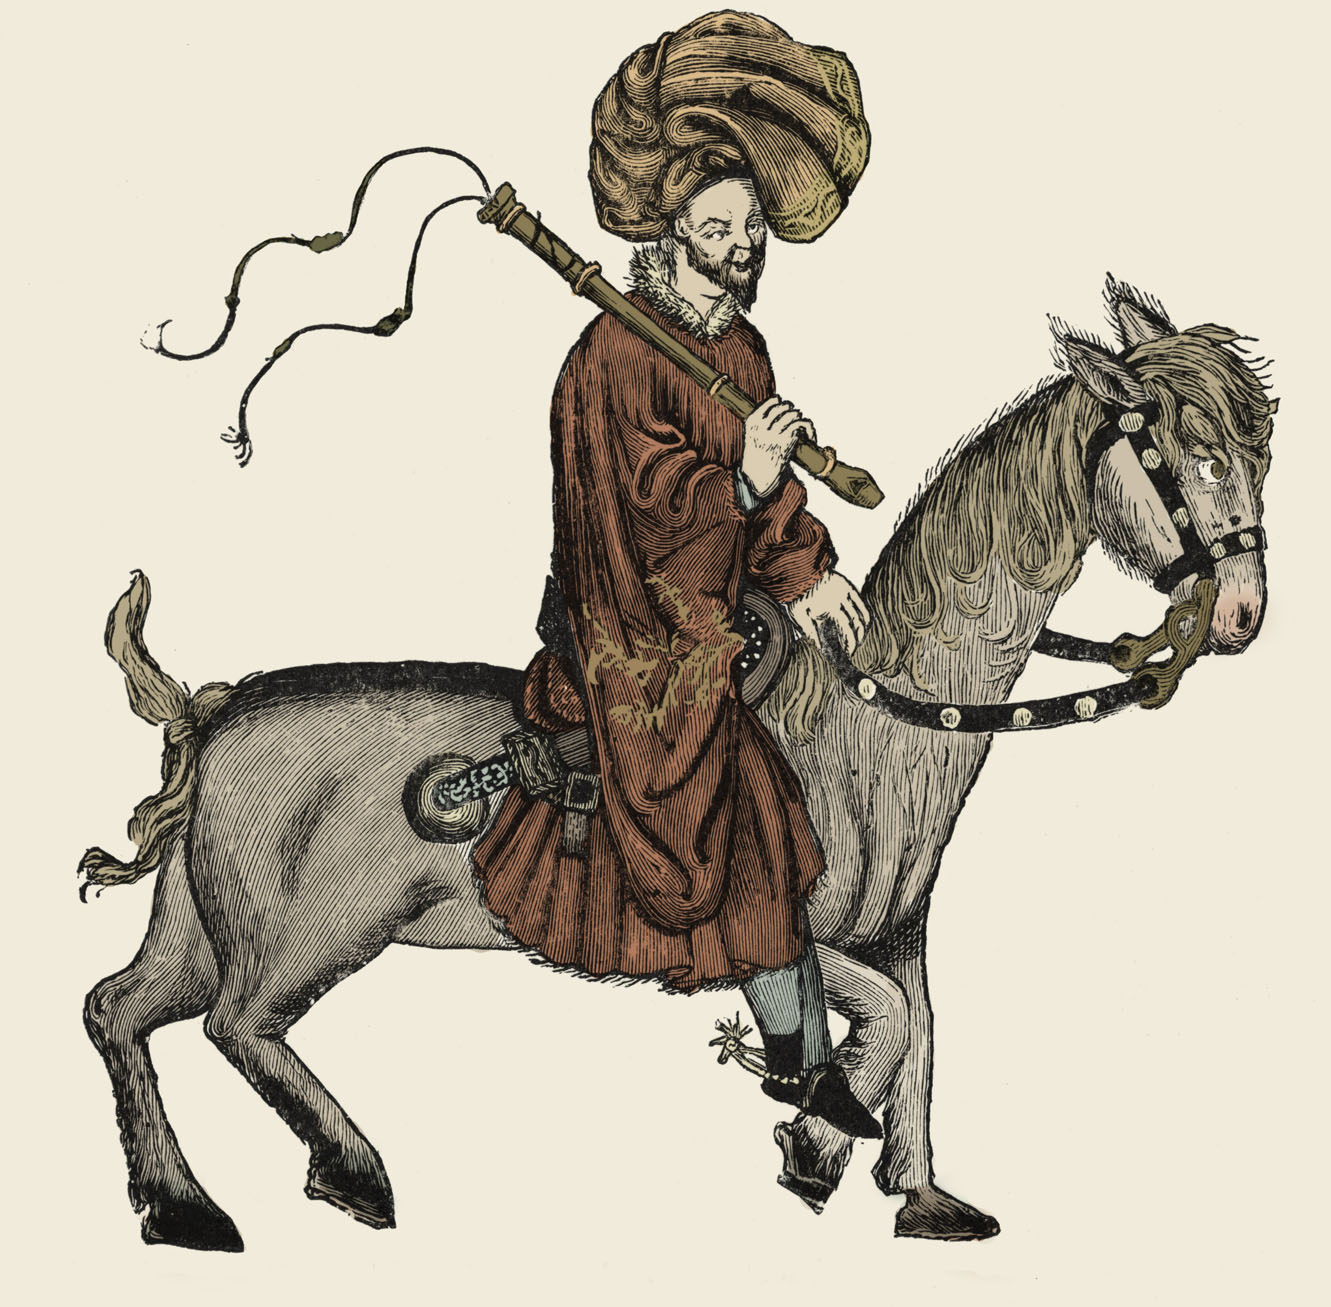 A man on horseback